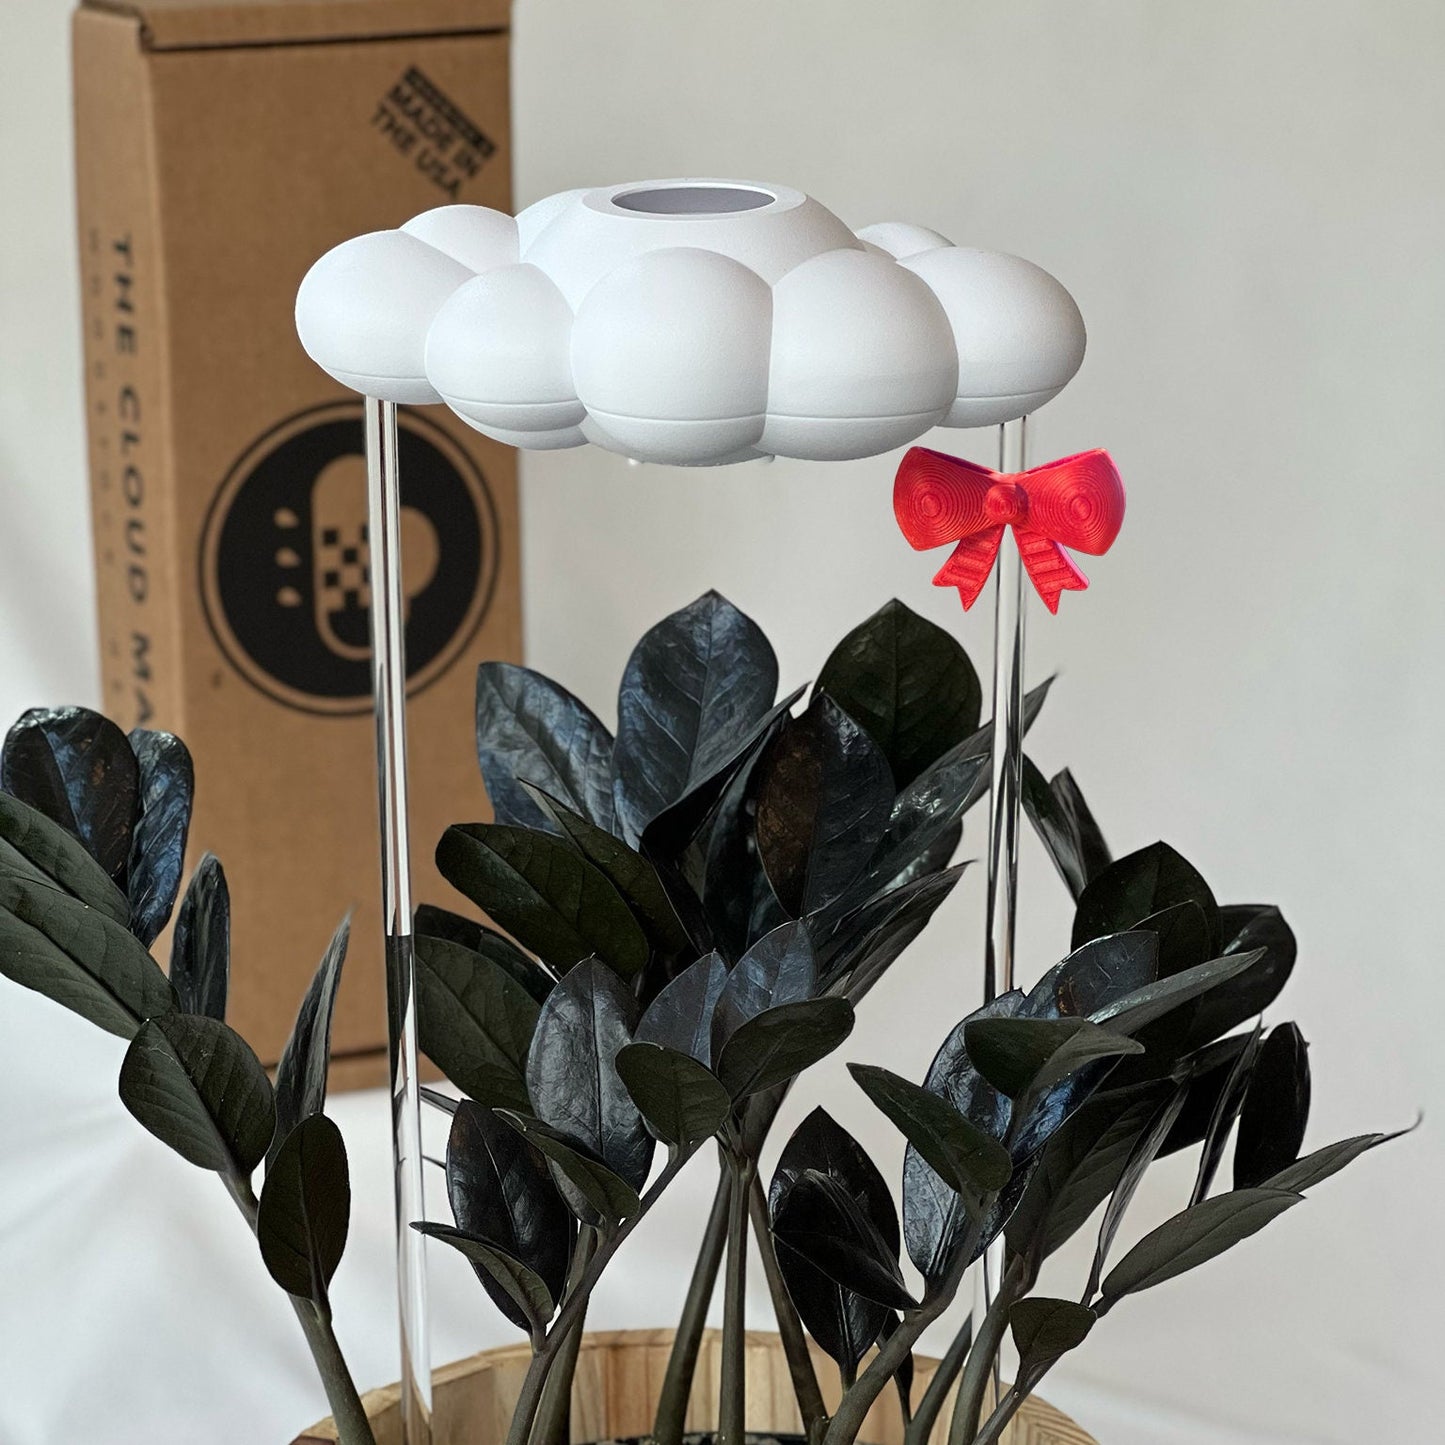 Original Dripping Rain cloud with 3D printed bow charm